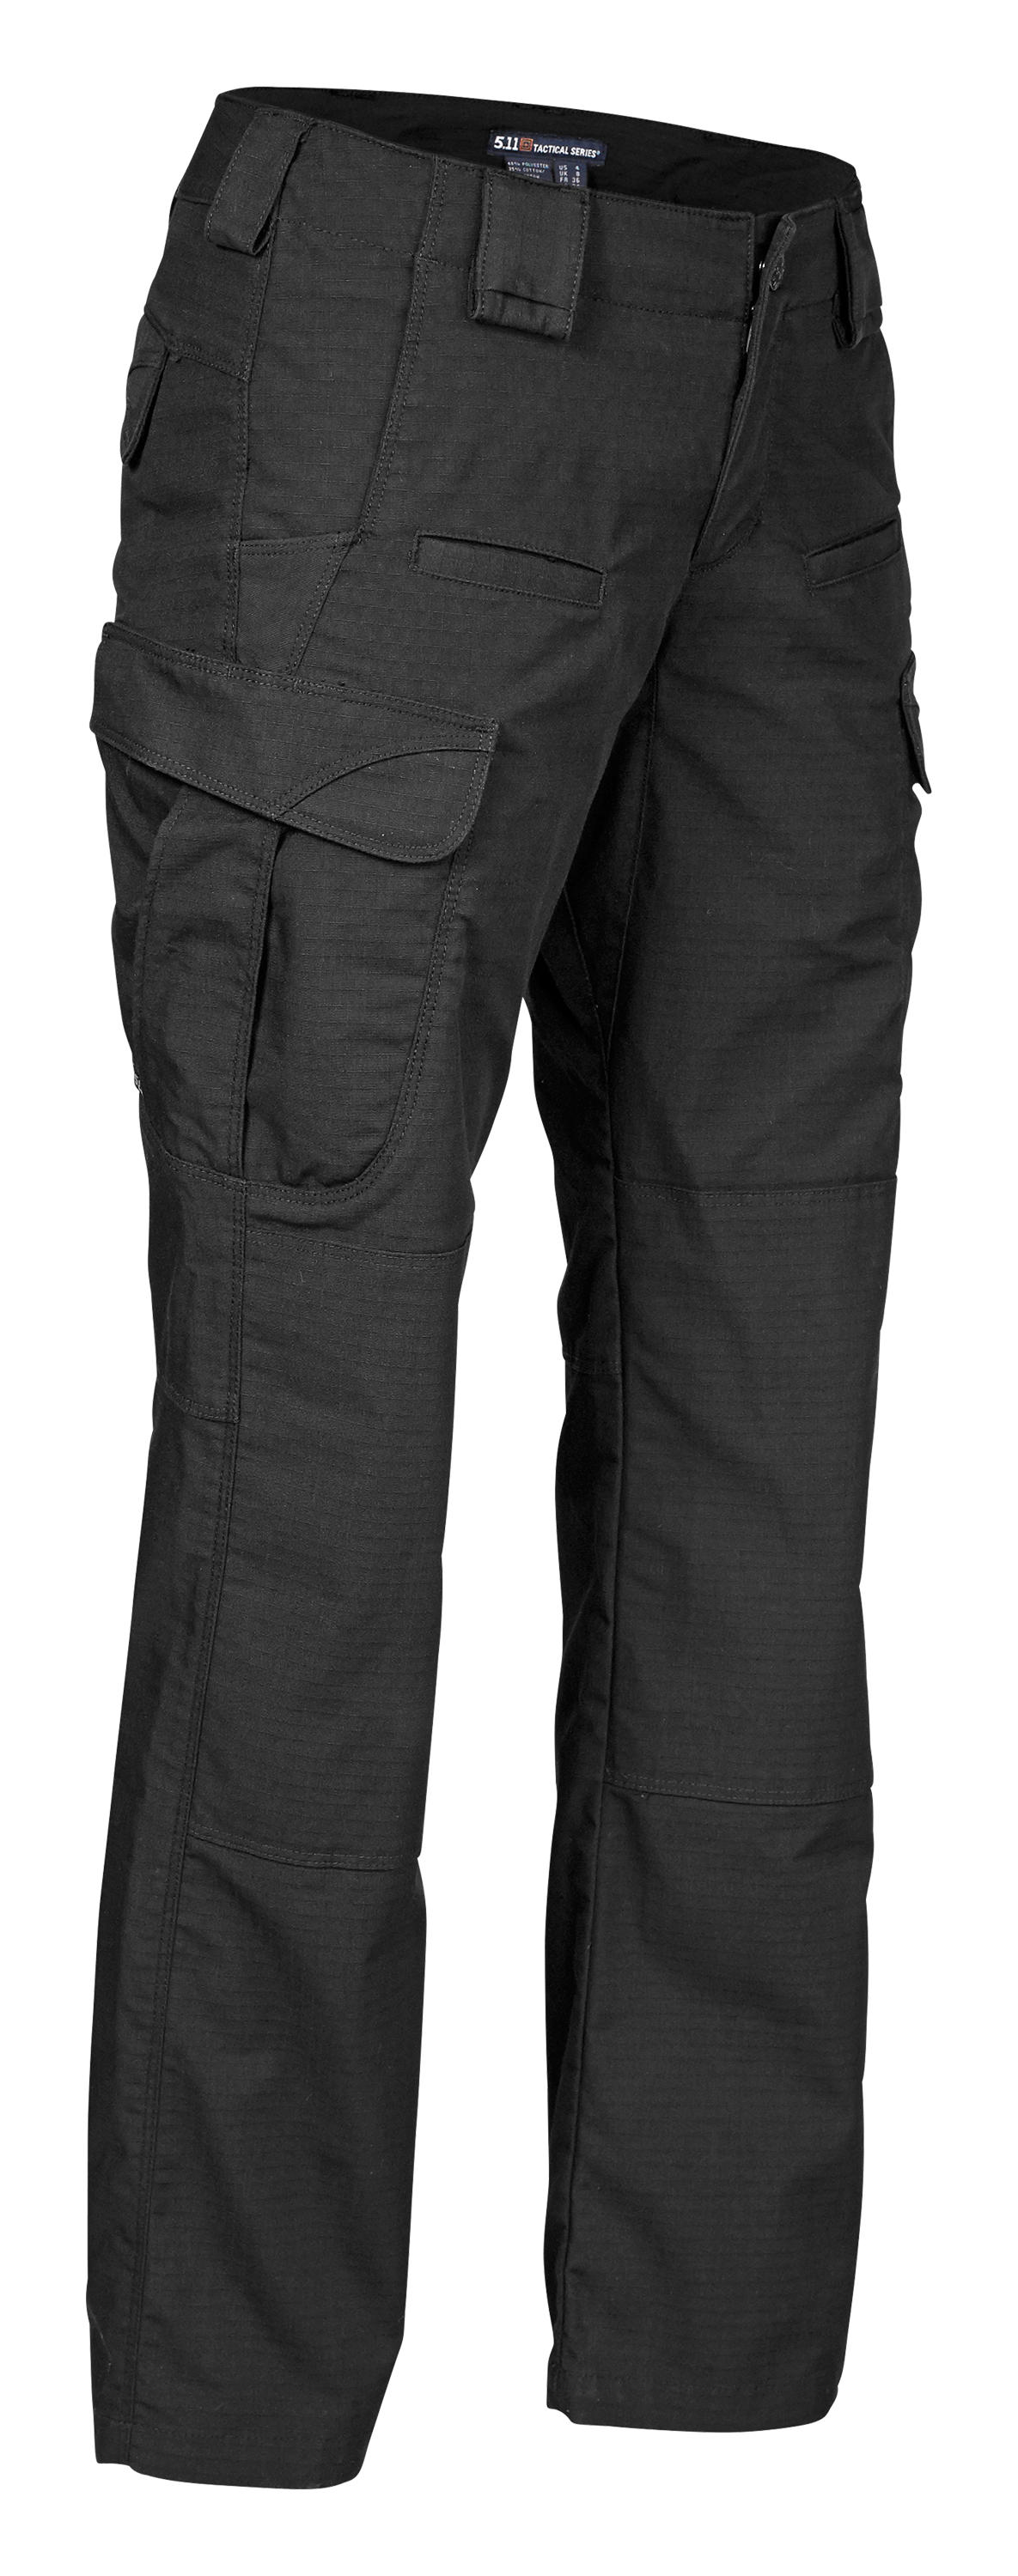 5.11 Stryke Tactical Pants For Ladies Black 4 Long